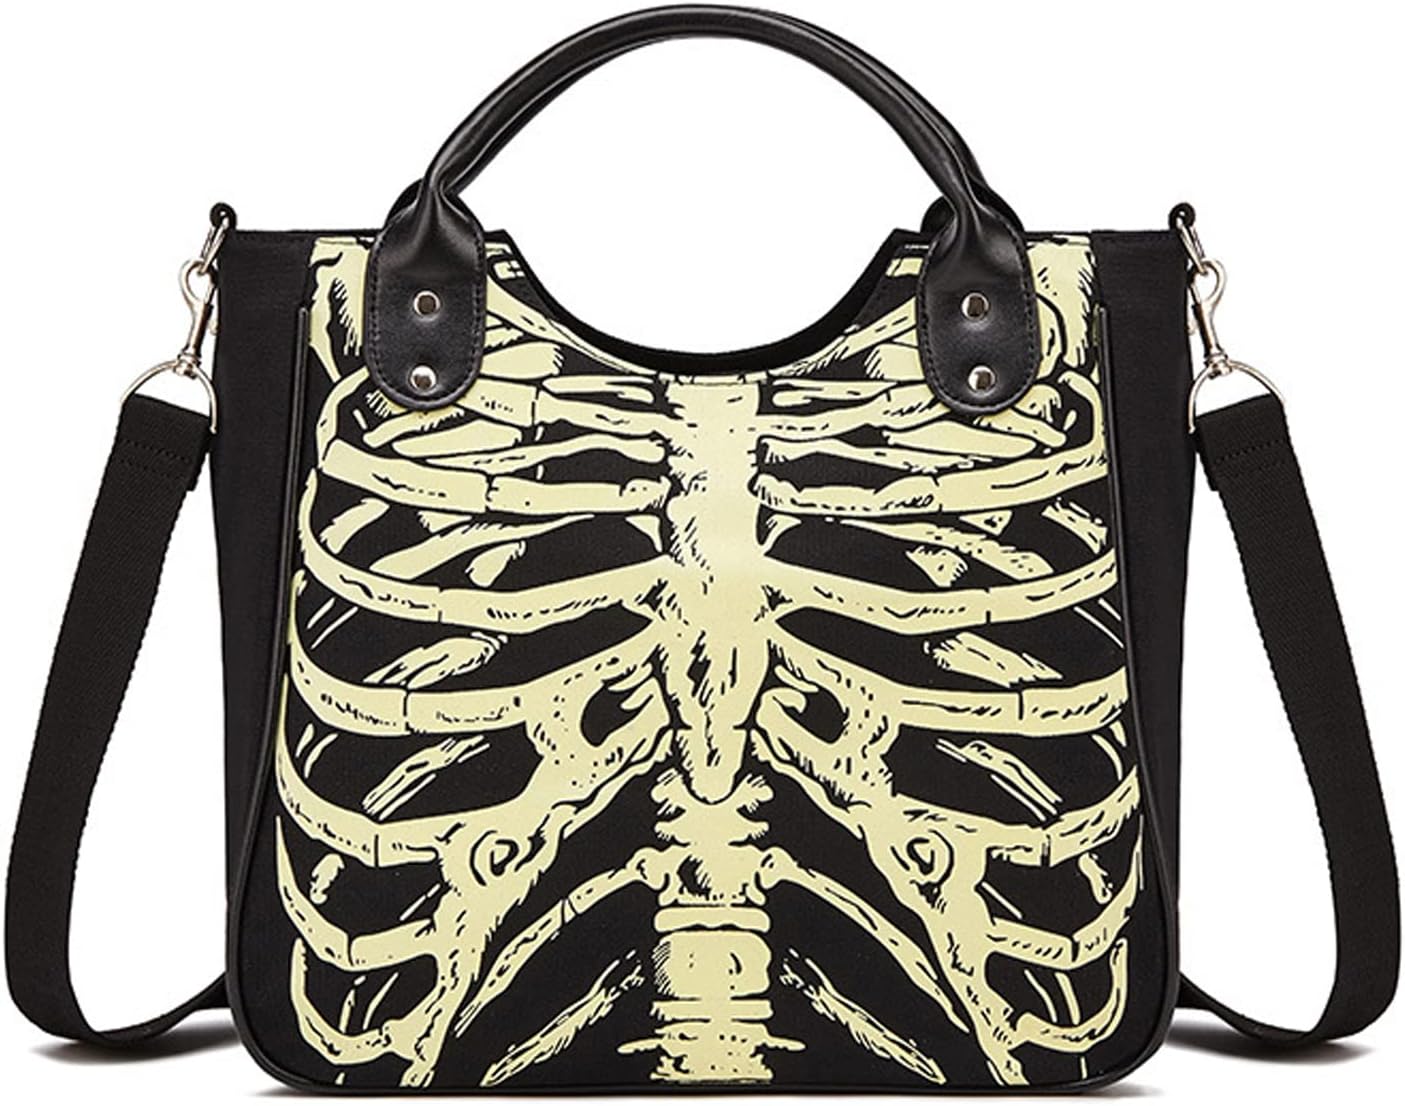 Micom Women Devil Skull Handbags PU Leather Top-Handle Satchel Shopping Bag with Clutch Purse